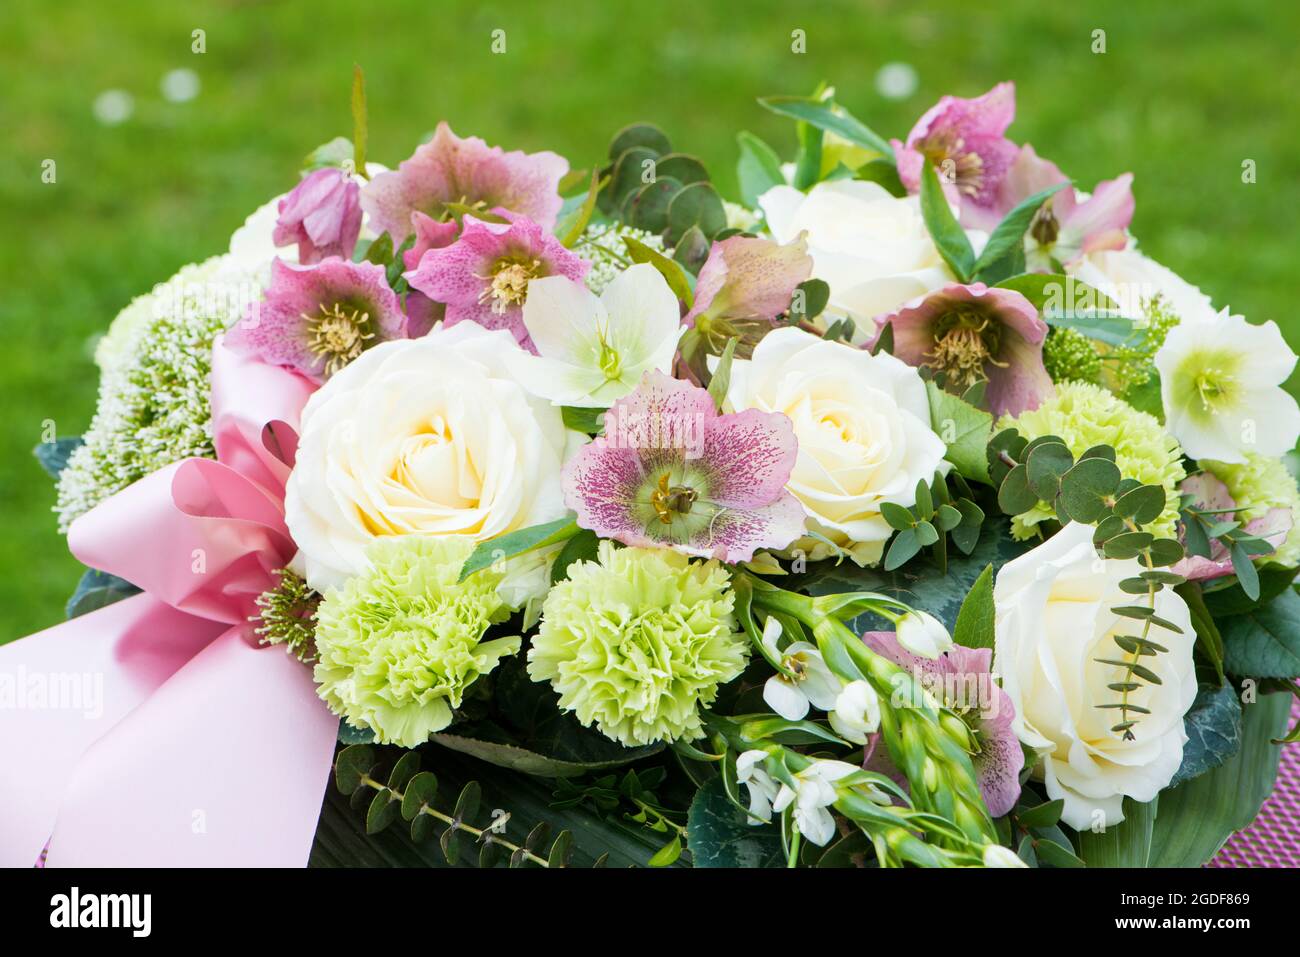 Heart flower bouquet with helleborus flowers Stock Photo - Alamy